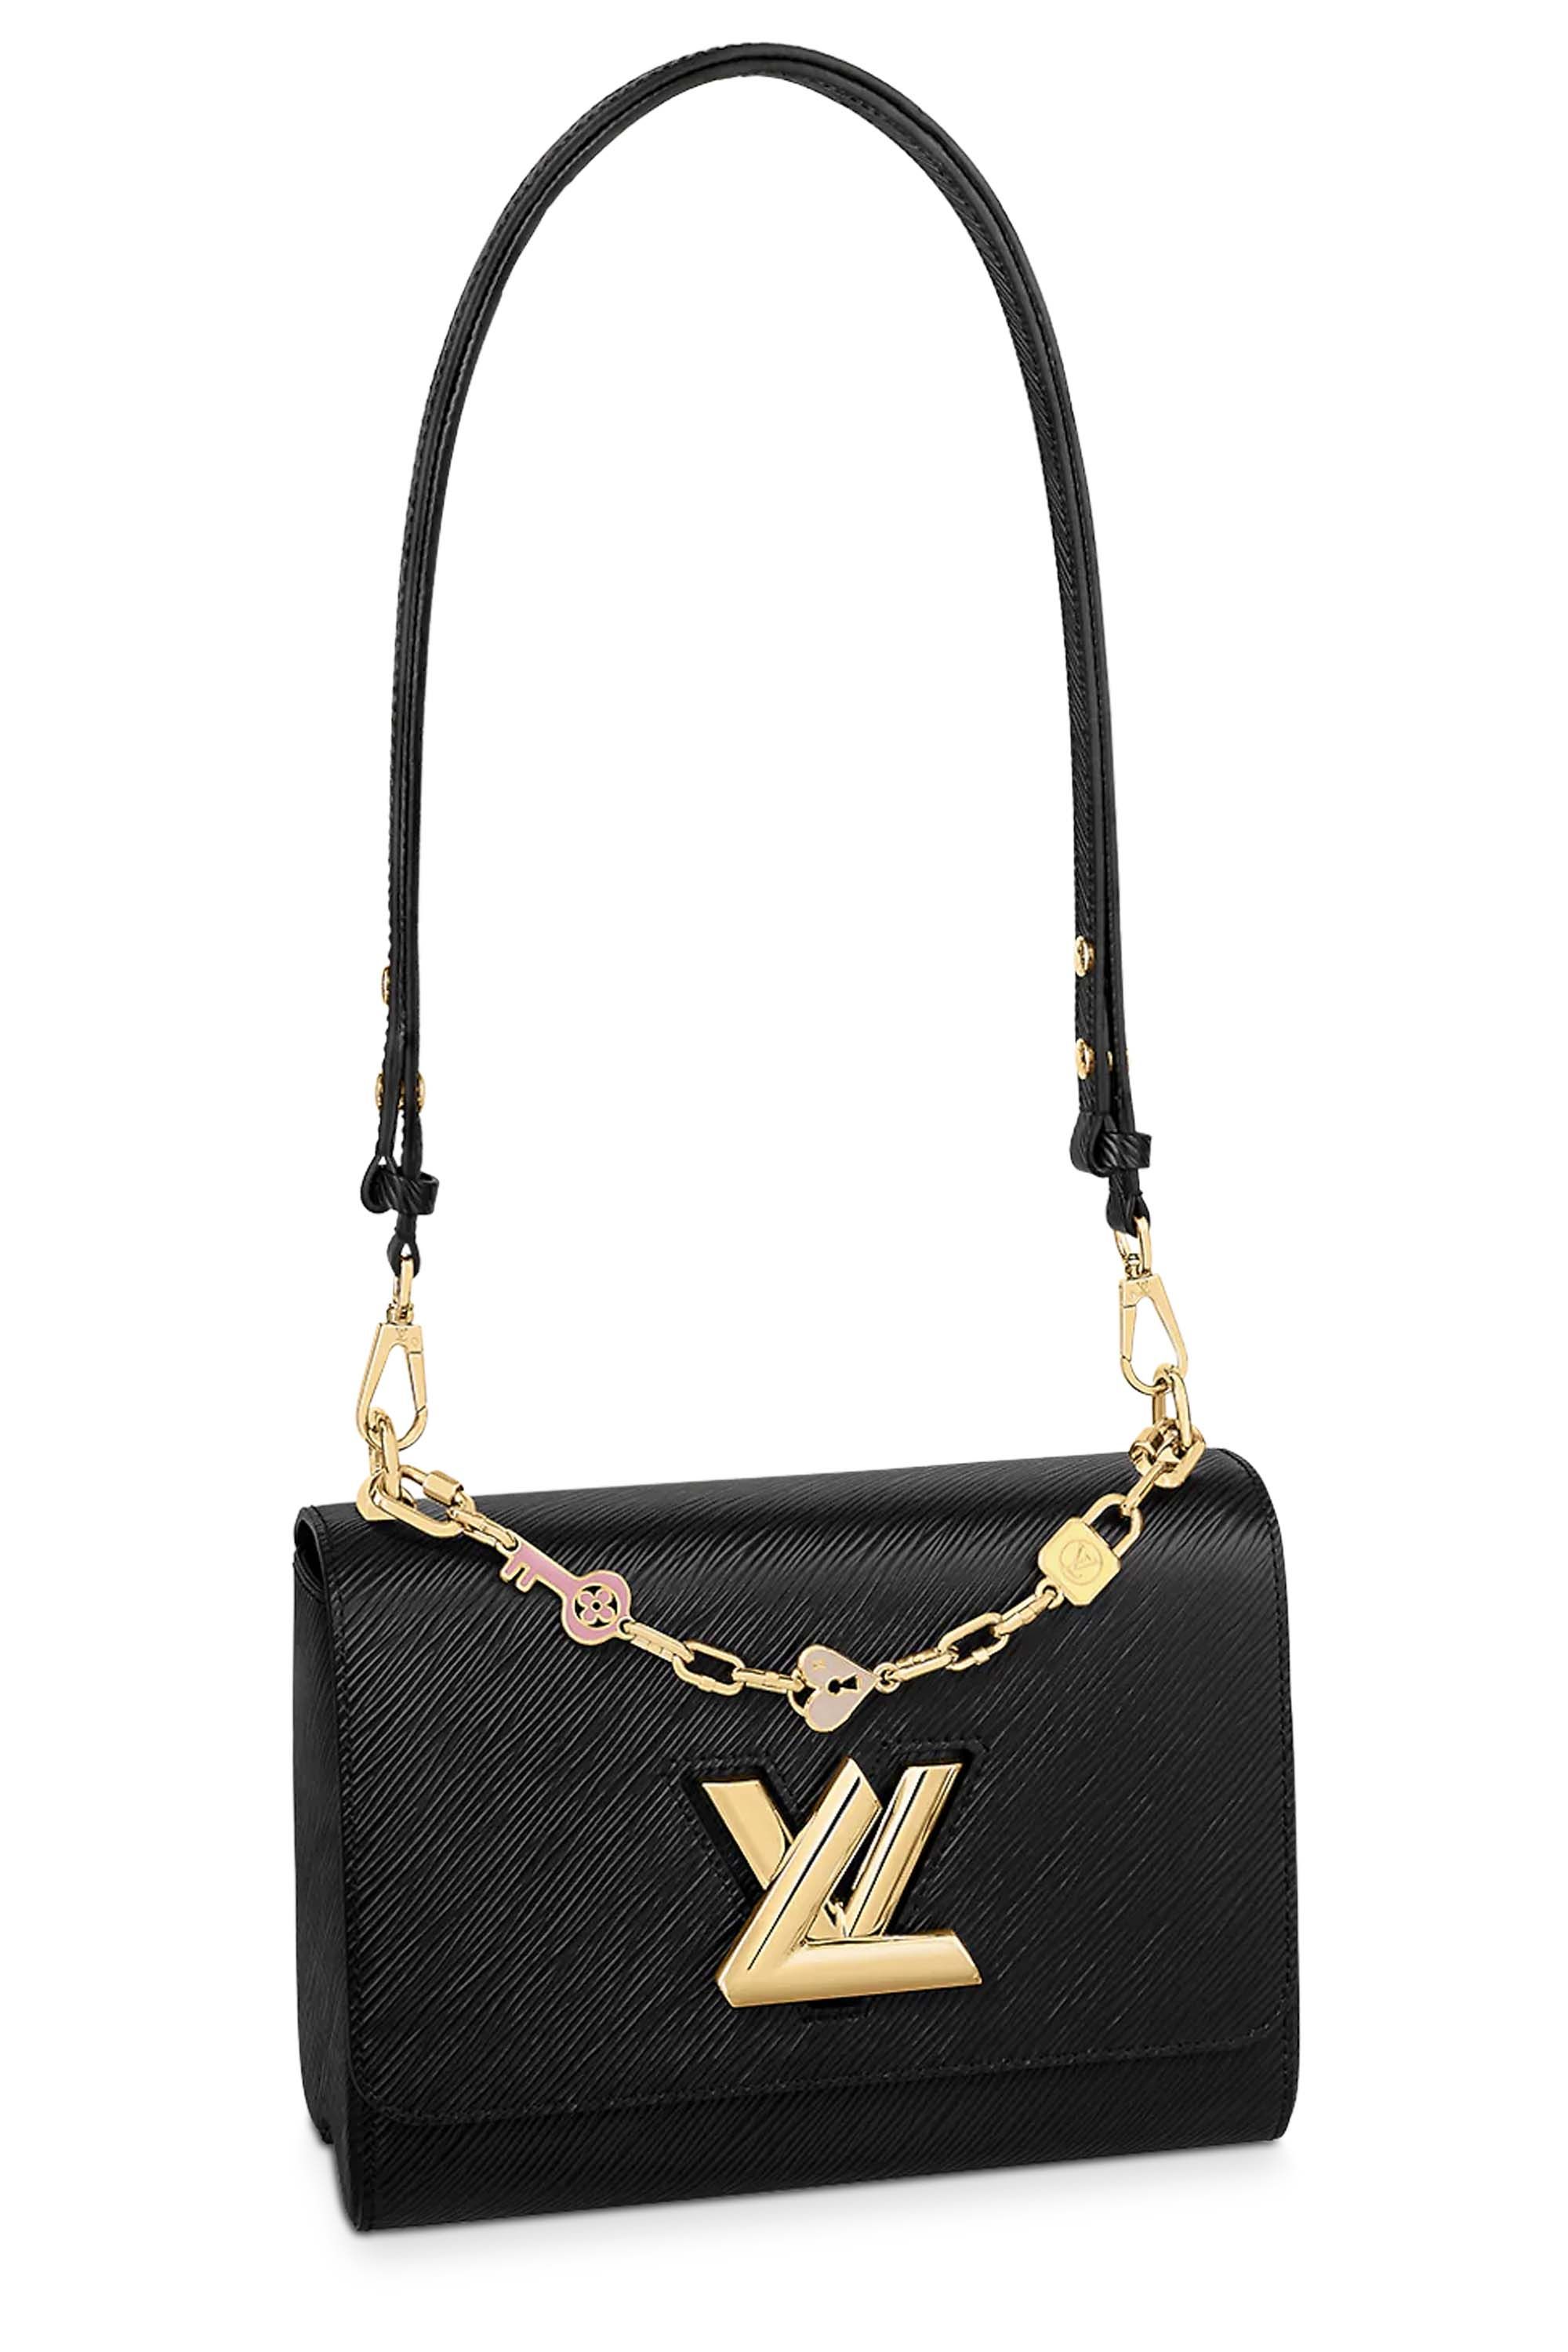 luxury brands bags